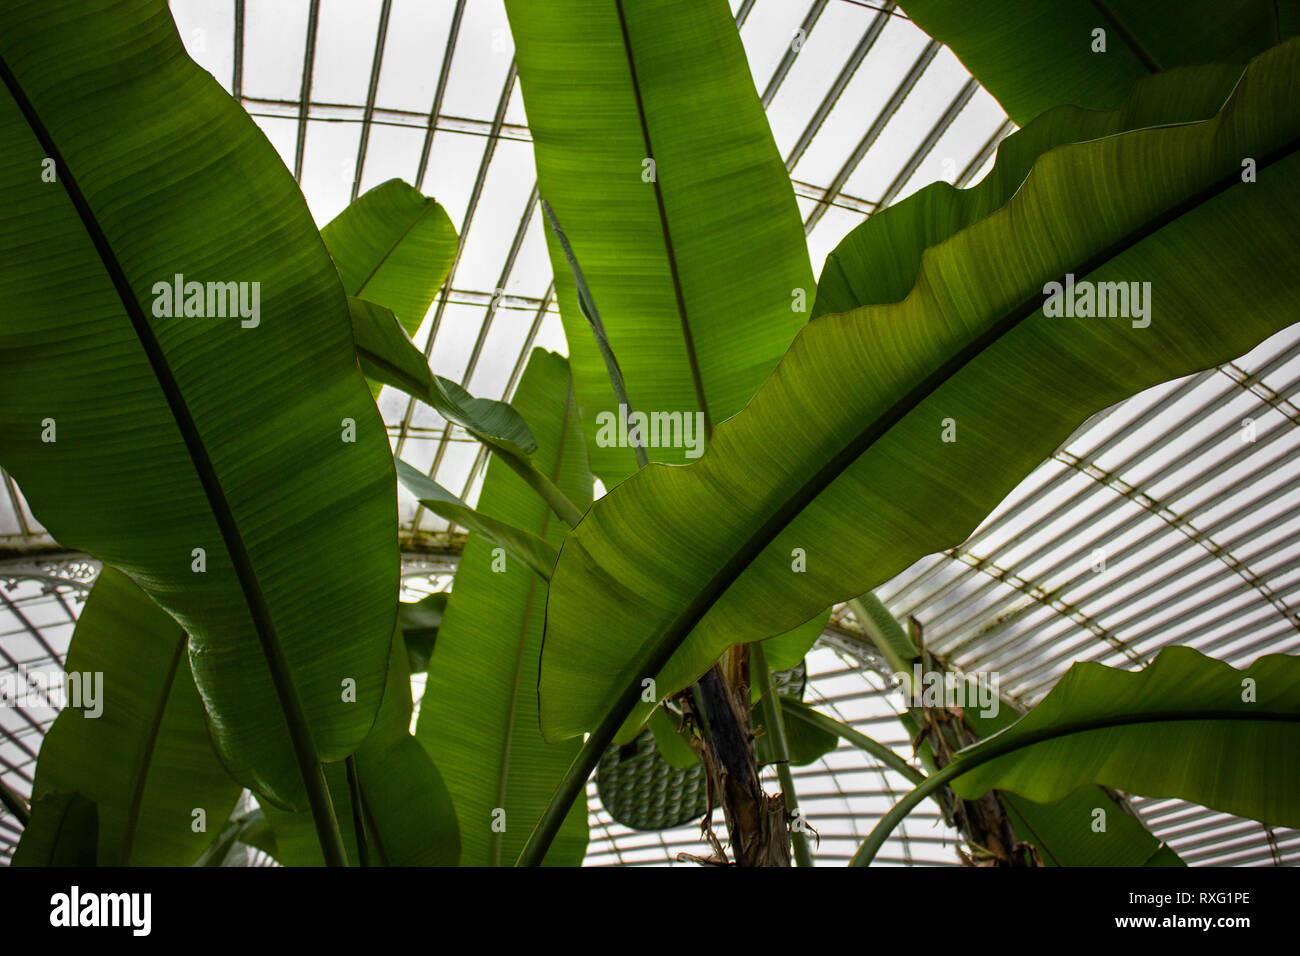 Glasgow Botanical Gardens - Large Green Leaves under glass ceiling Stock Photo